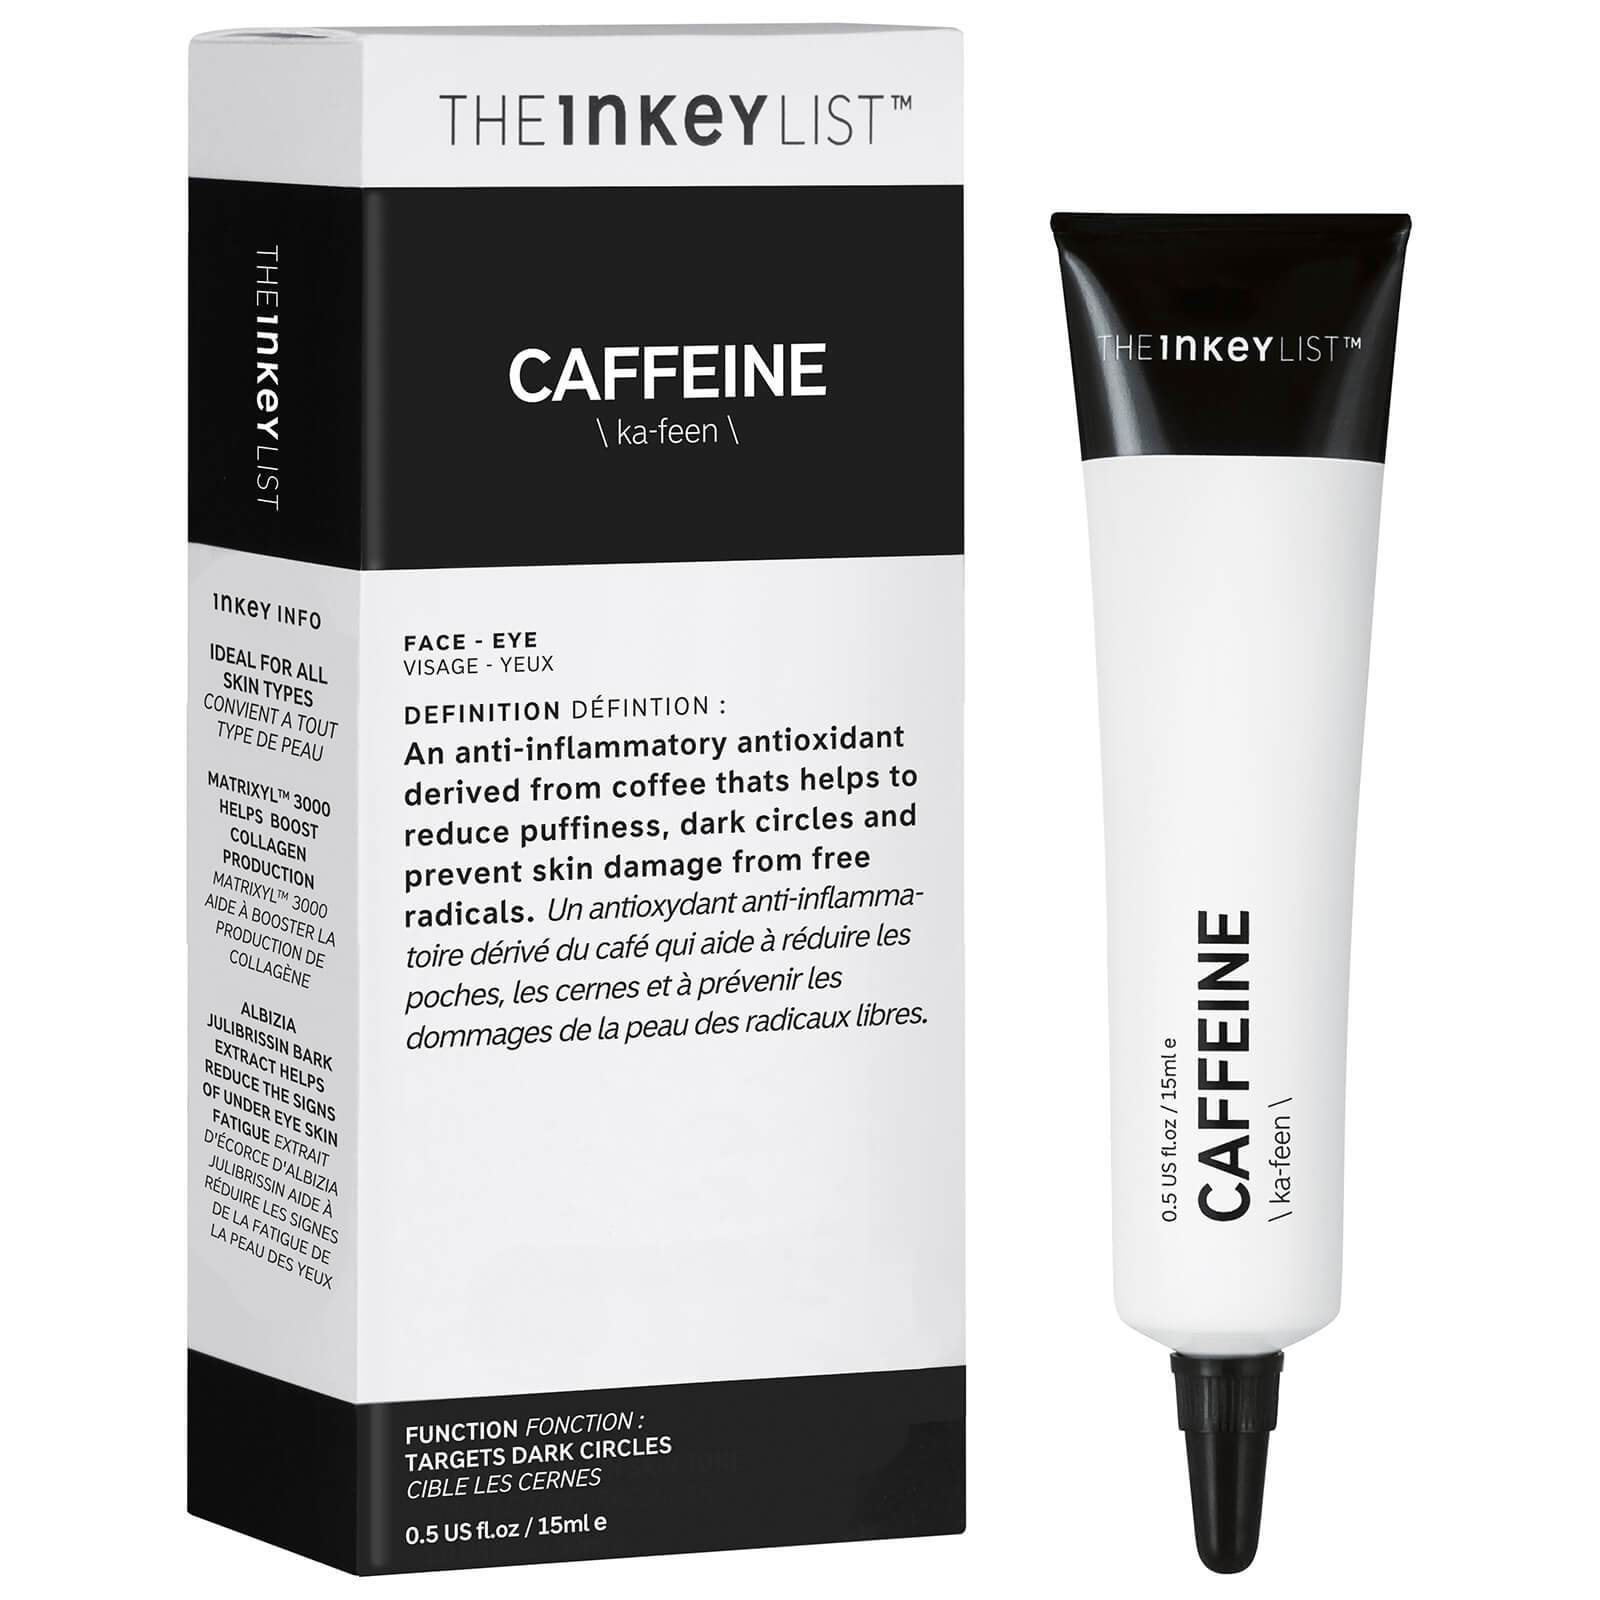 The Inkey List Caffeine Eye cream